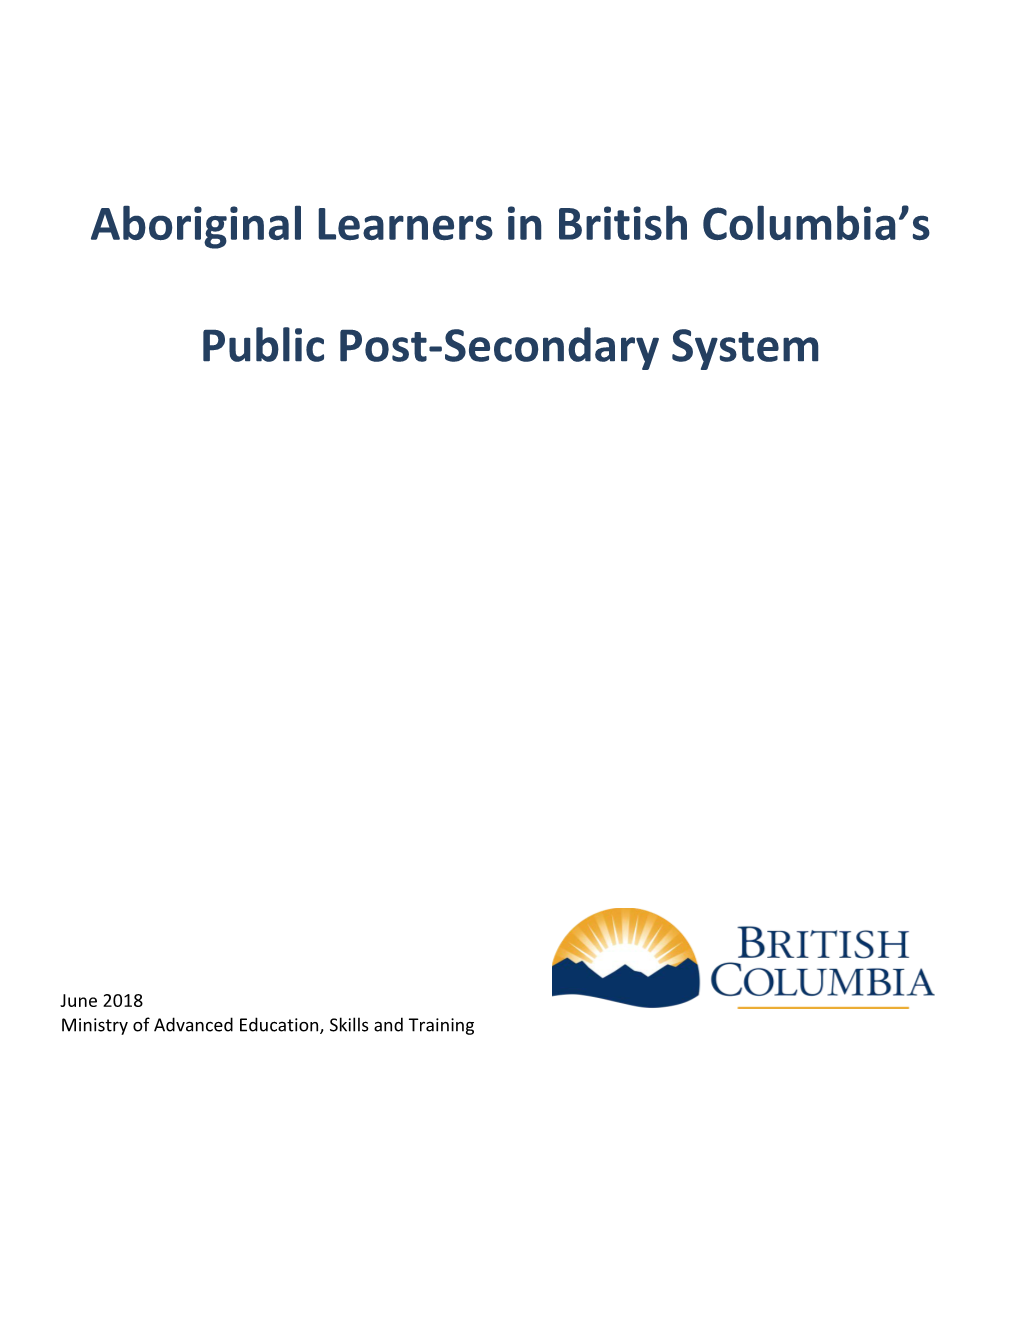 Aboriginal Learners in British Columbia's Public Post-Secondary